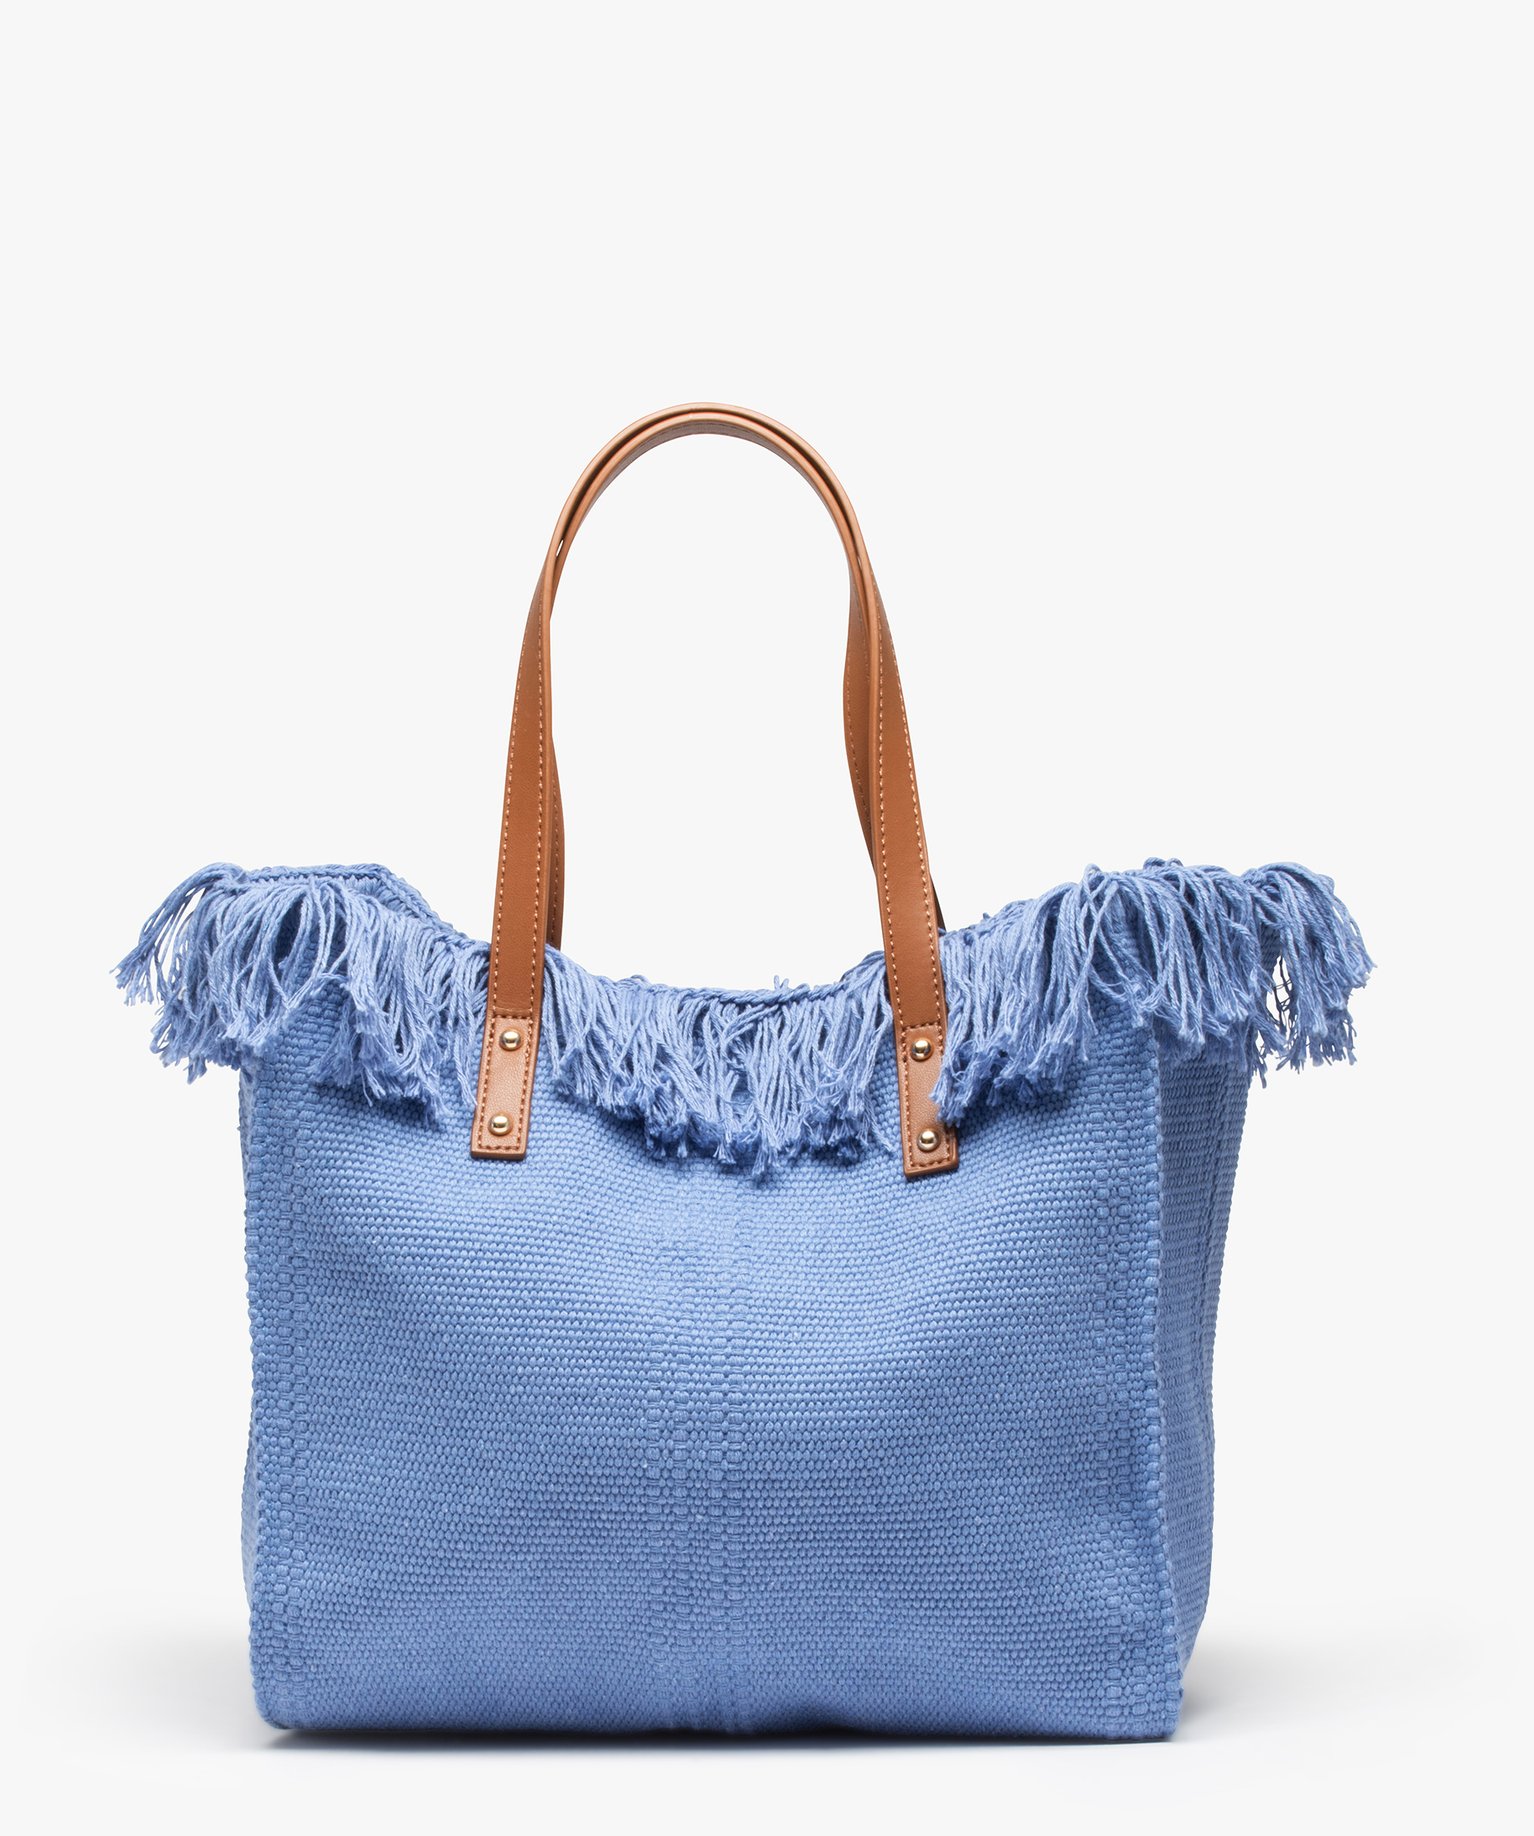 sac femme en textile a franges grand format bleu sacs a main